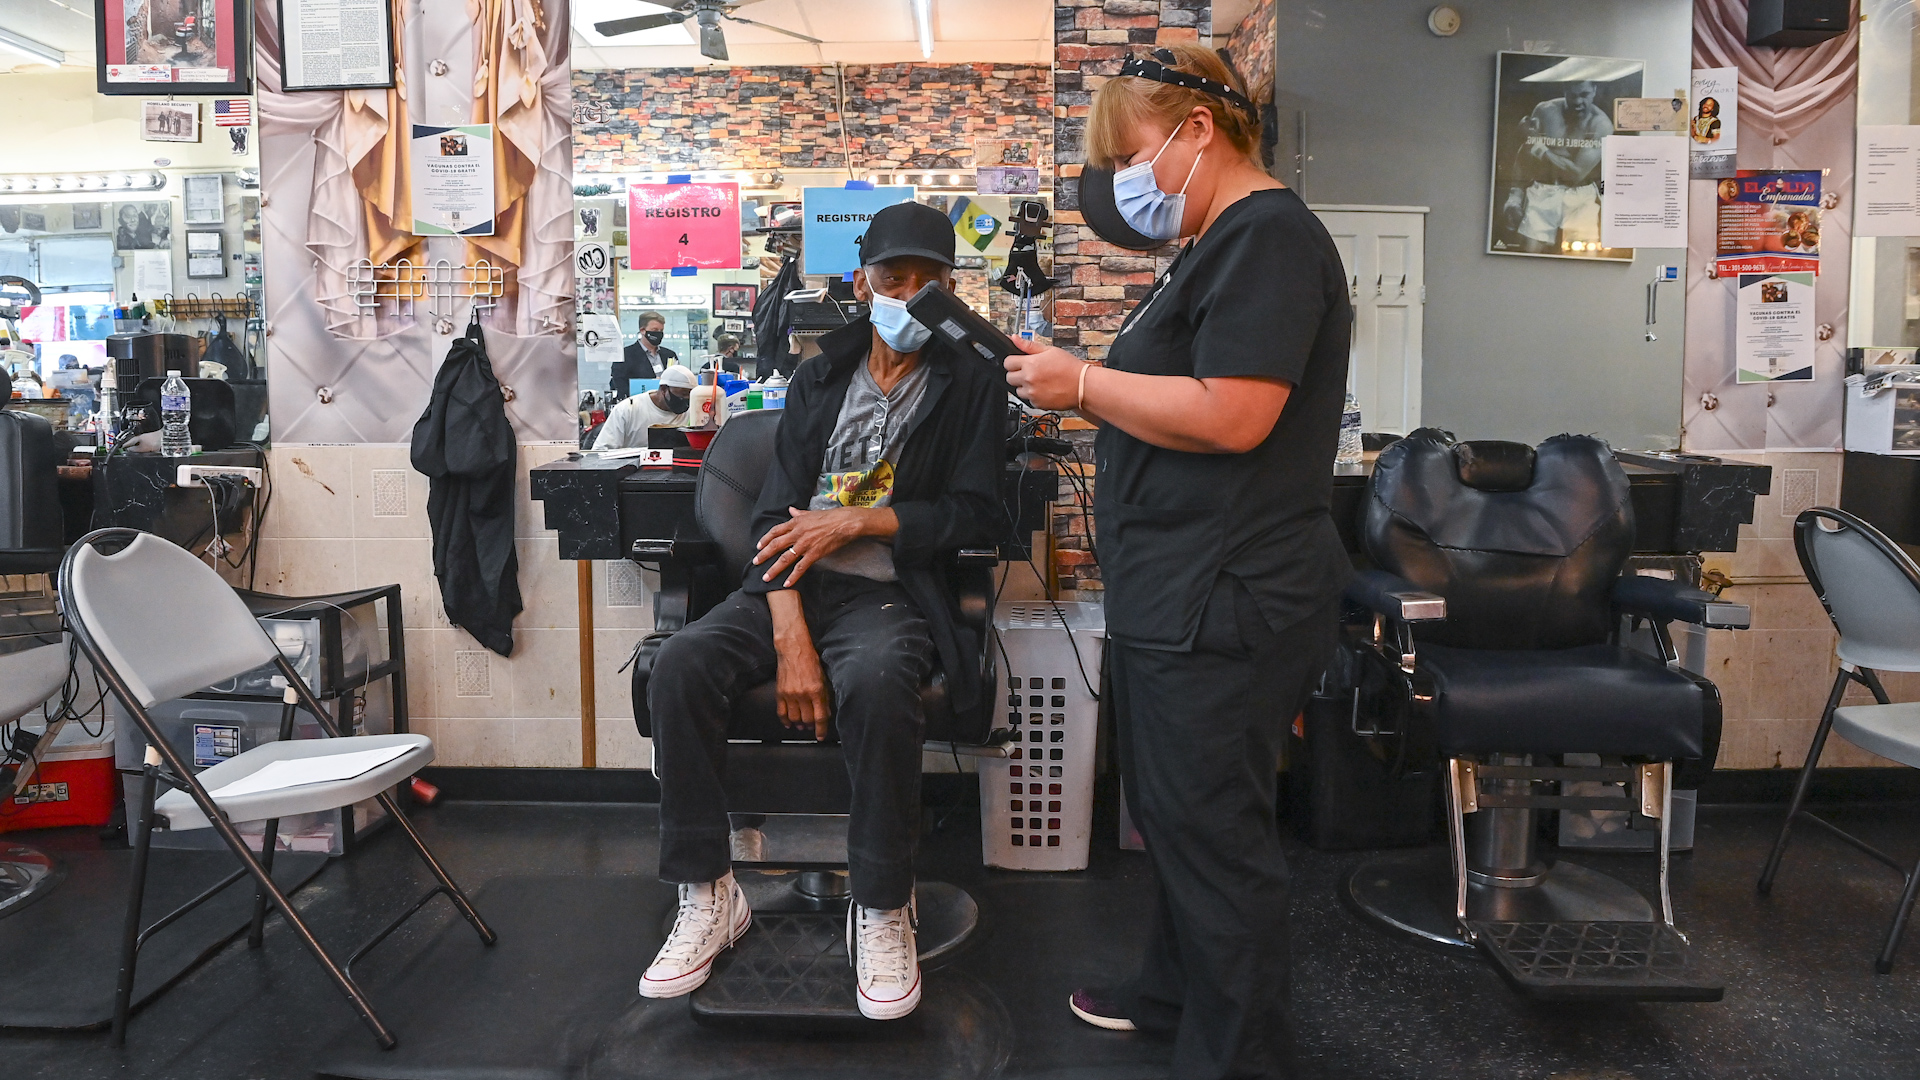 Media barbershop opens in defiance of Gov. Wolf's coronavirus